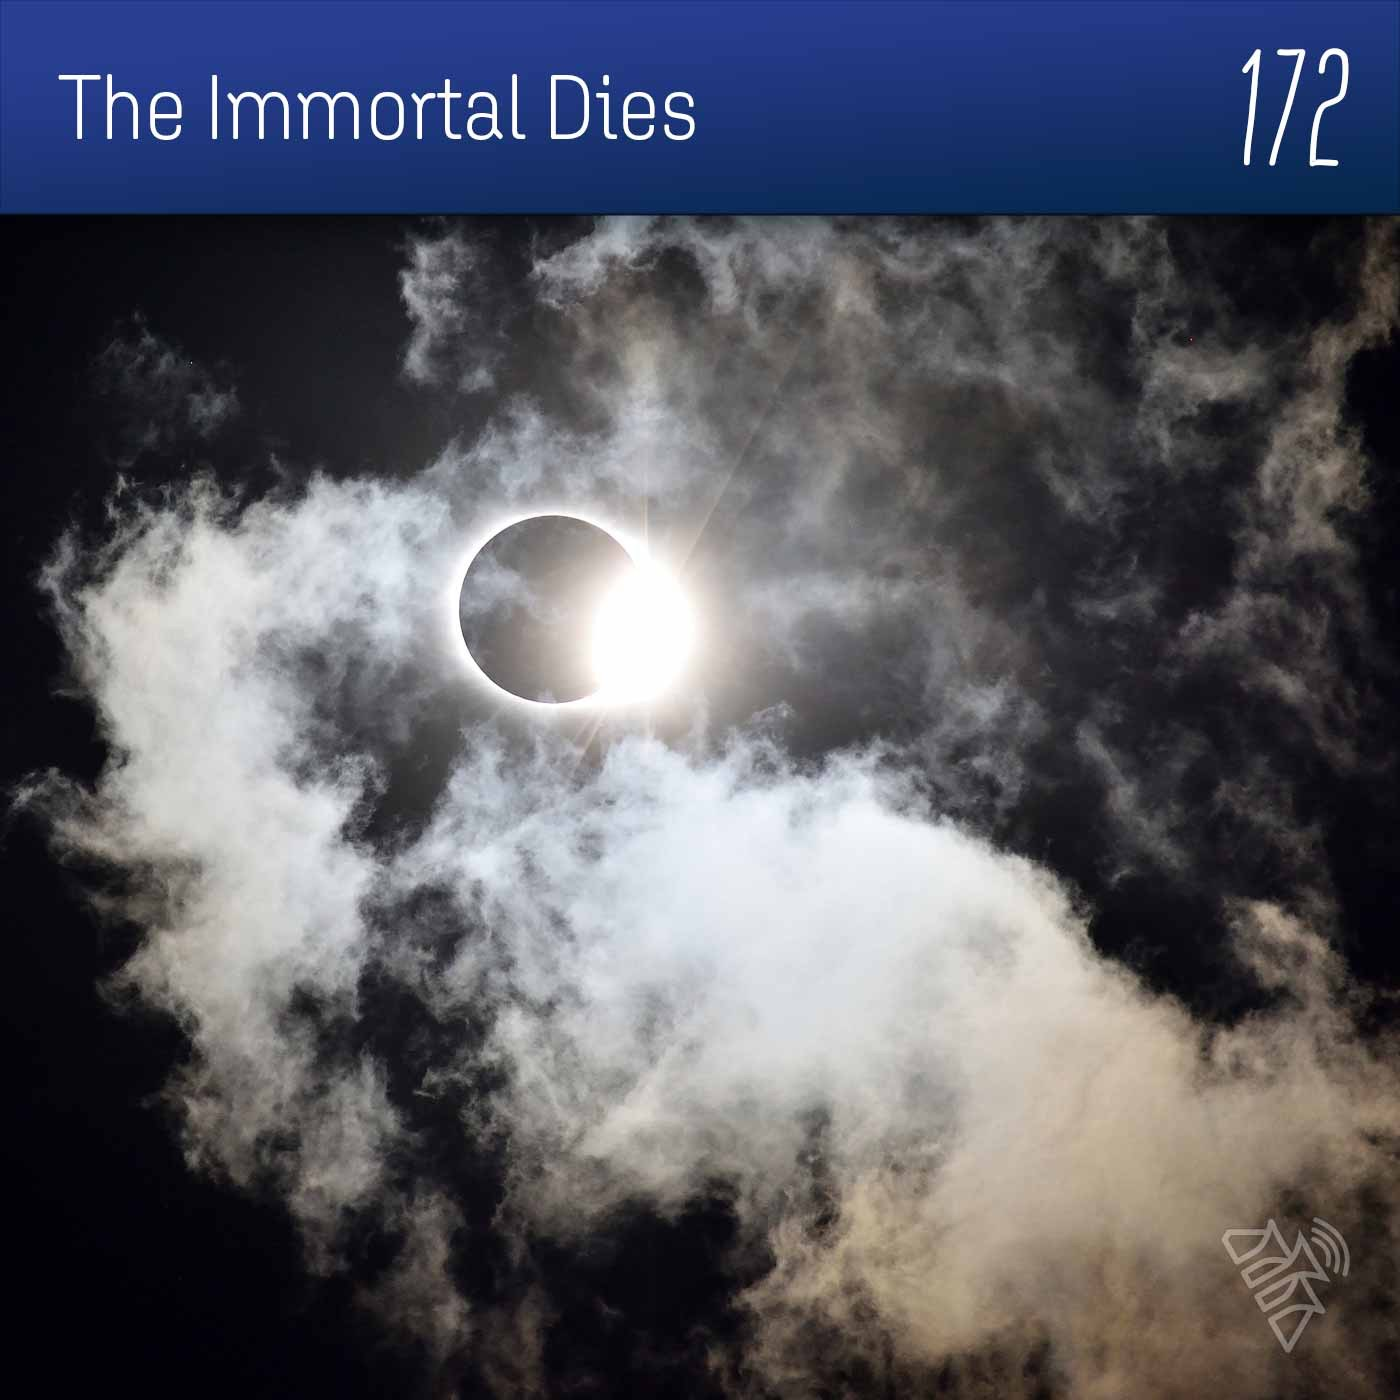 The Immortal Dies - Ben Robinson - 172